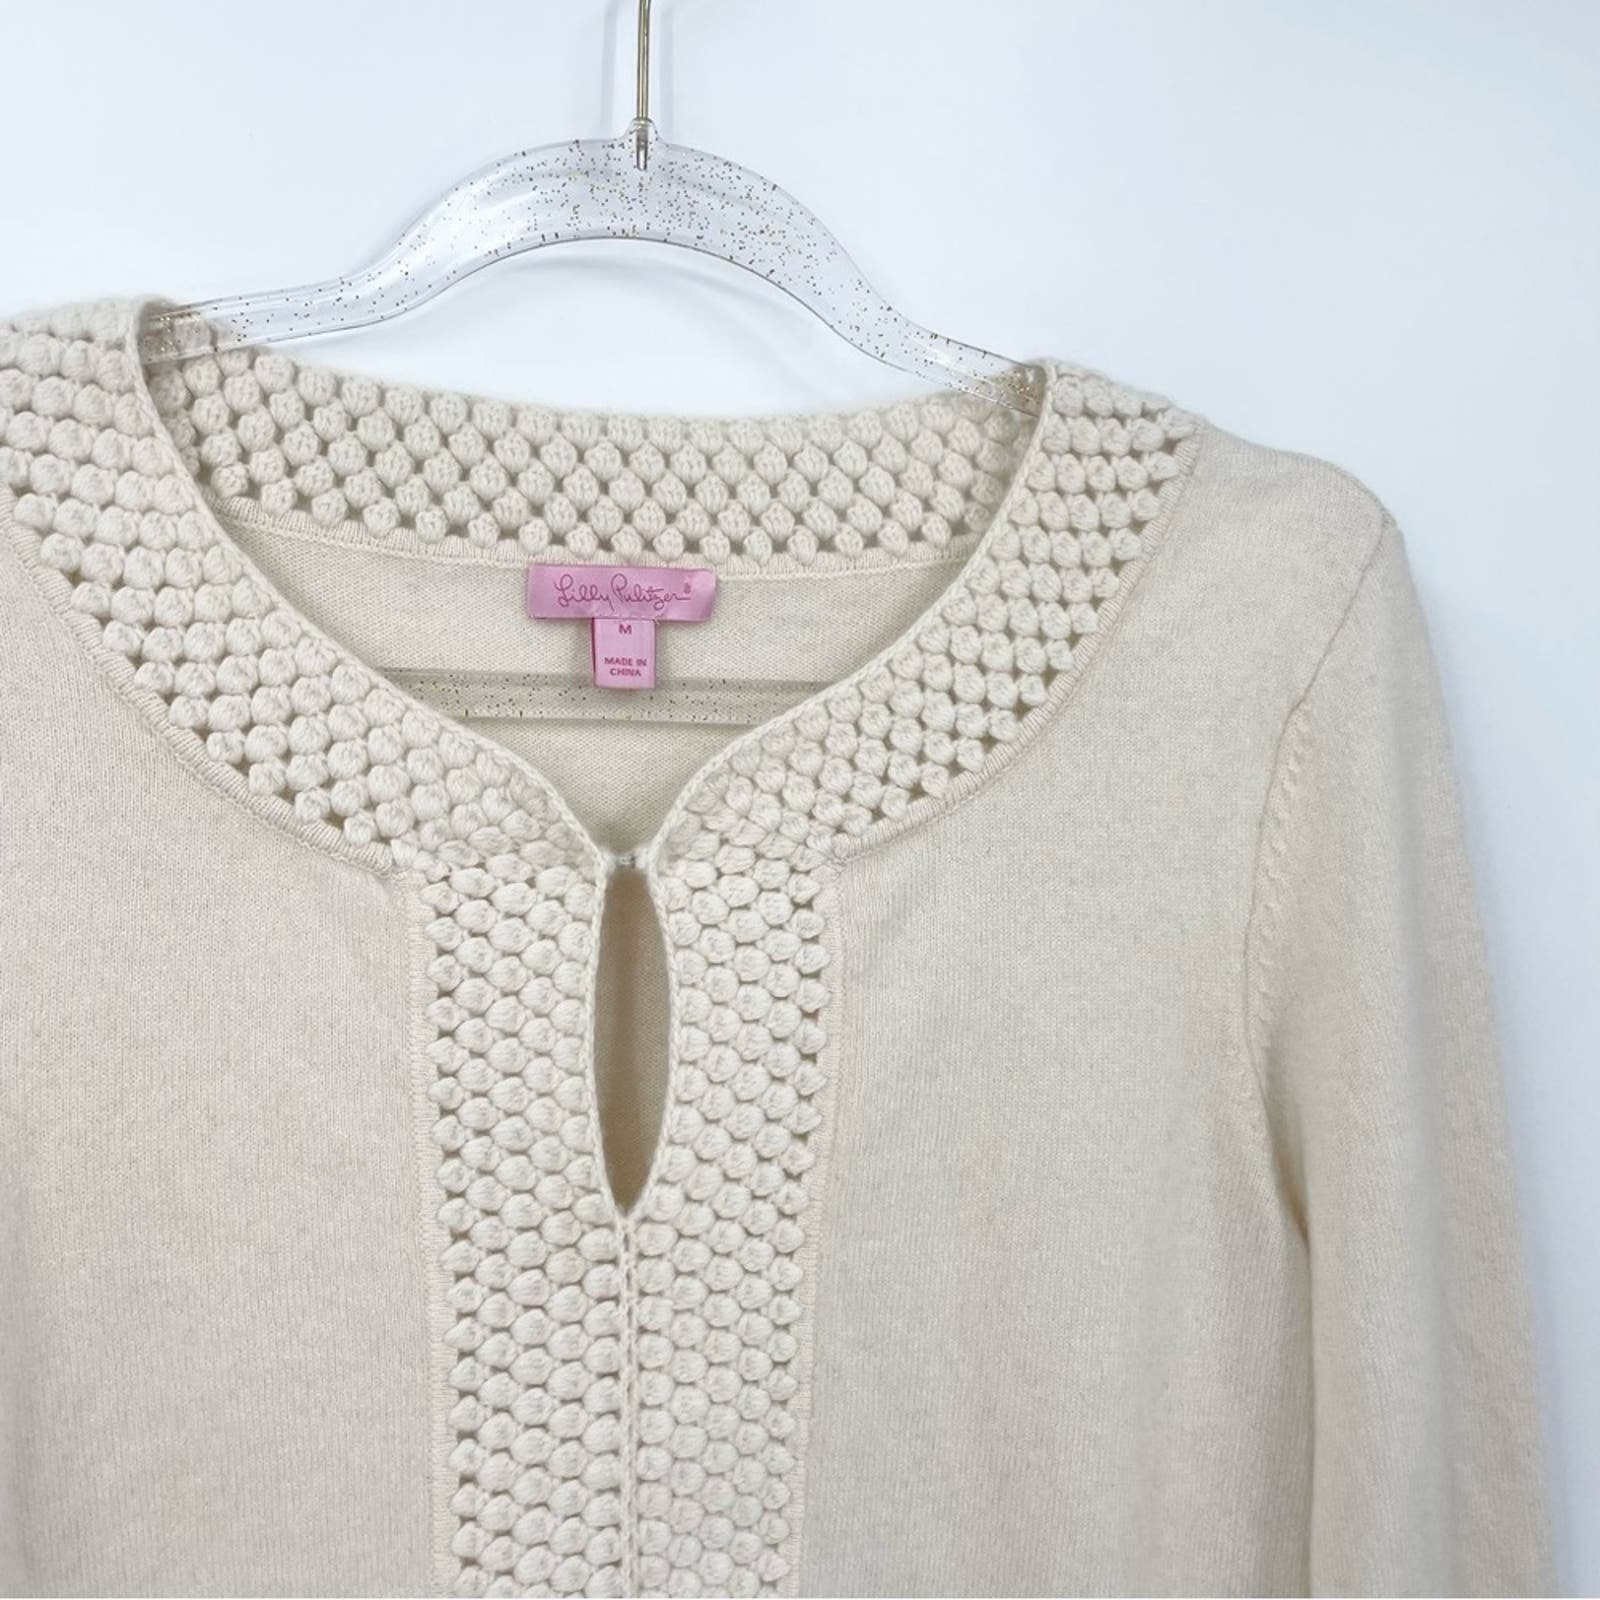 Amazing Lilly Pulitzer Cashmere Sweater Size Medium hSJsI3ofc just buy it